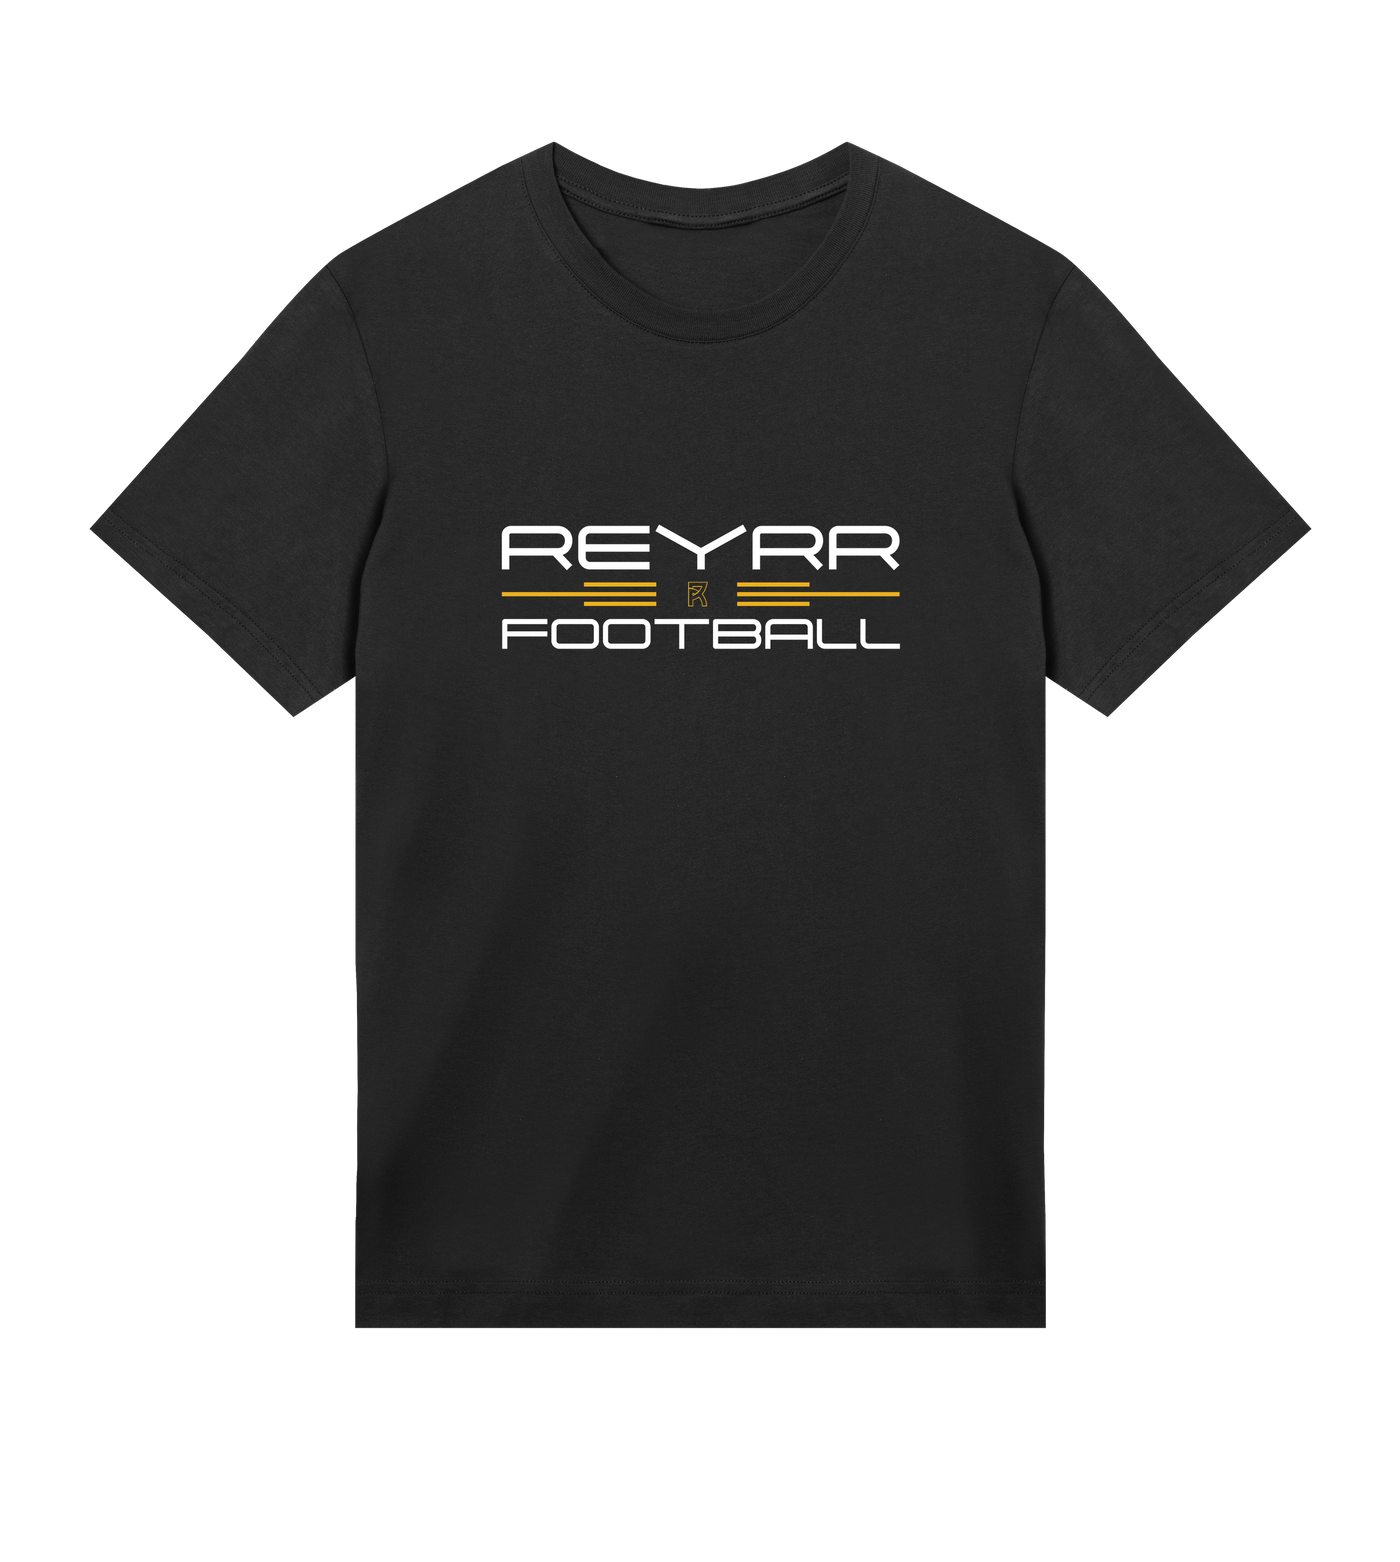 Reyrr Football T-shirt - Premium t-shirt from REYRR STUDIO - Shop now at Reyrr Athletics